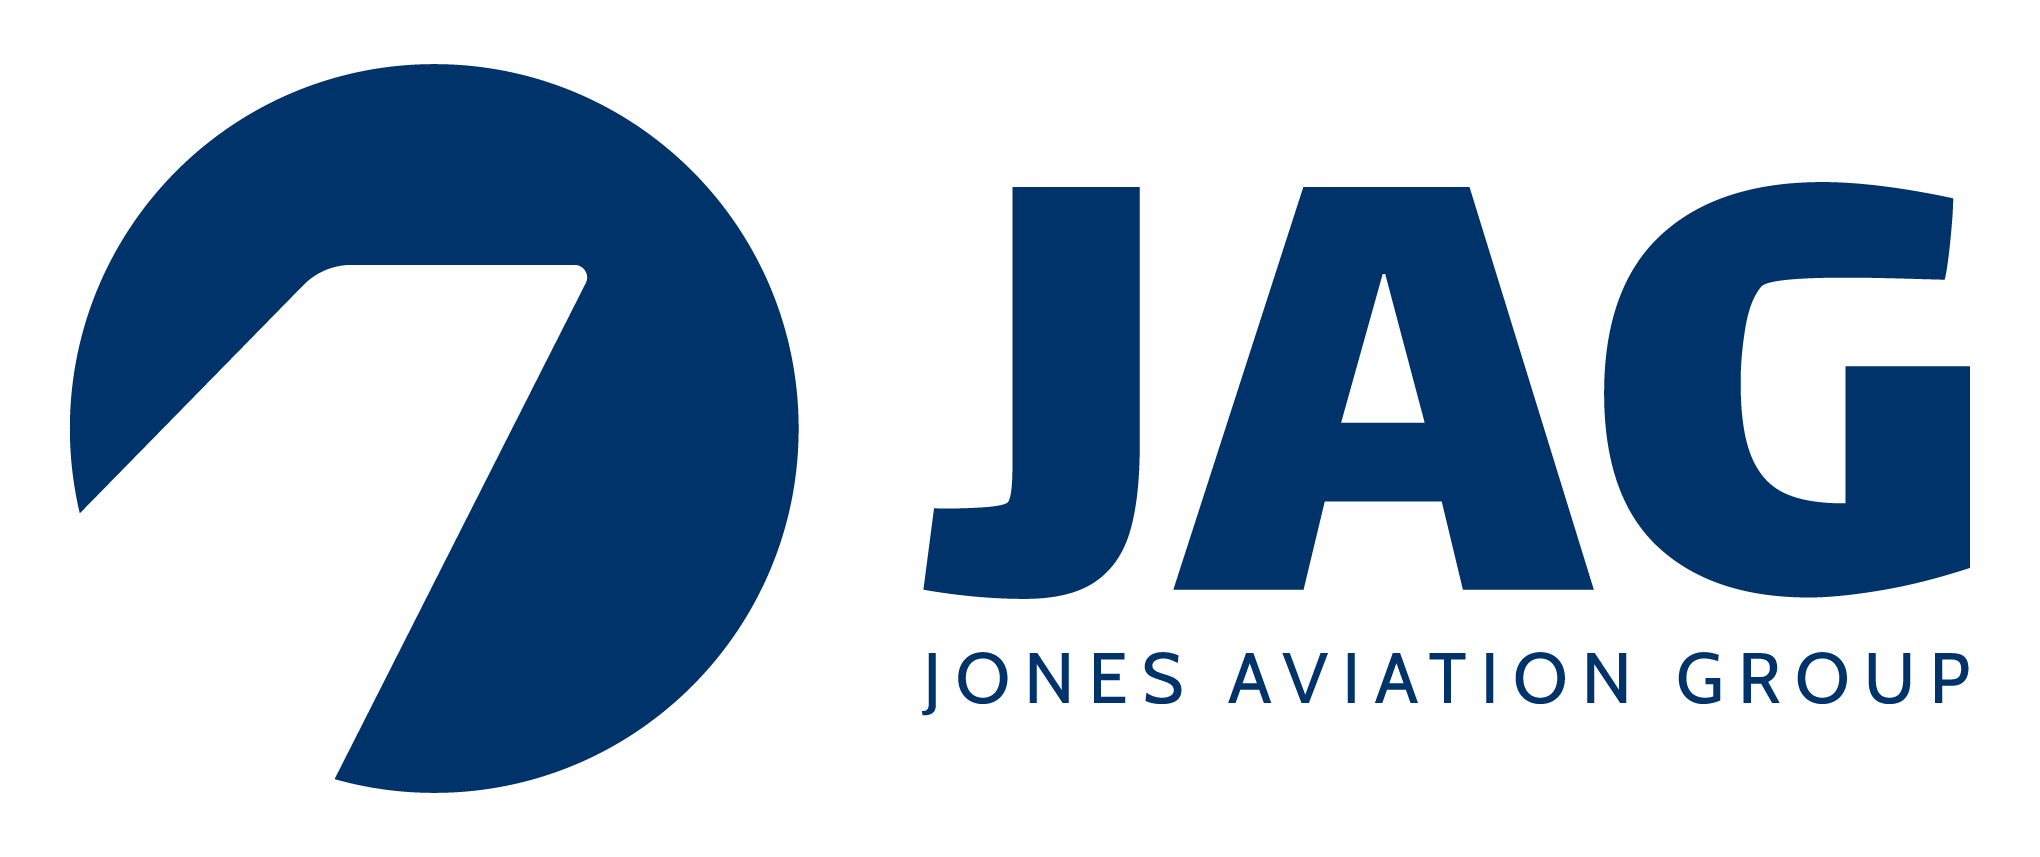 Jones Aviation Group LLC logo